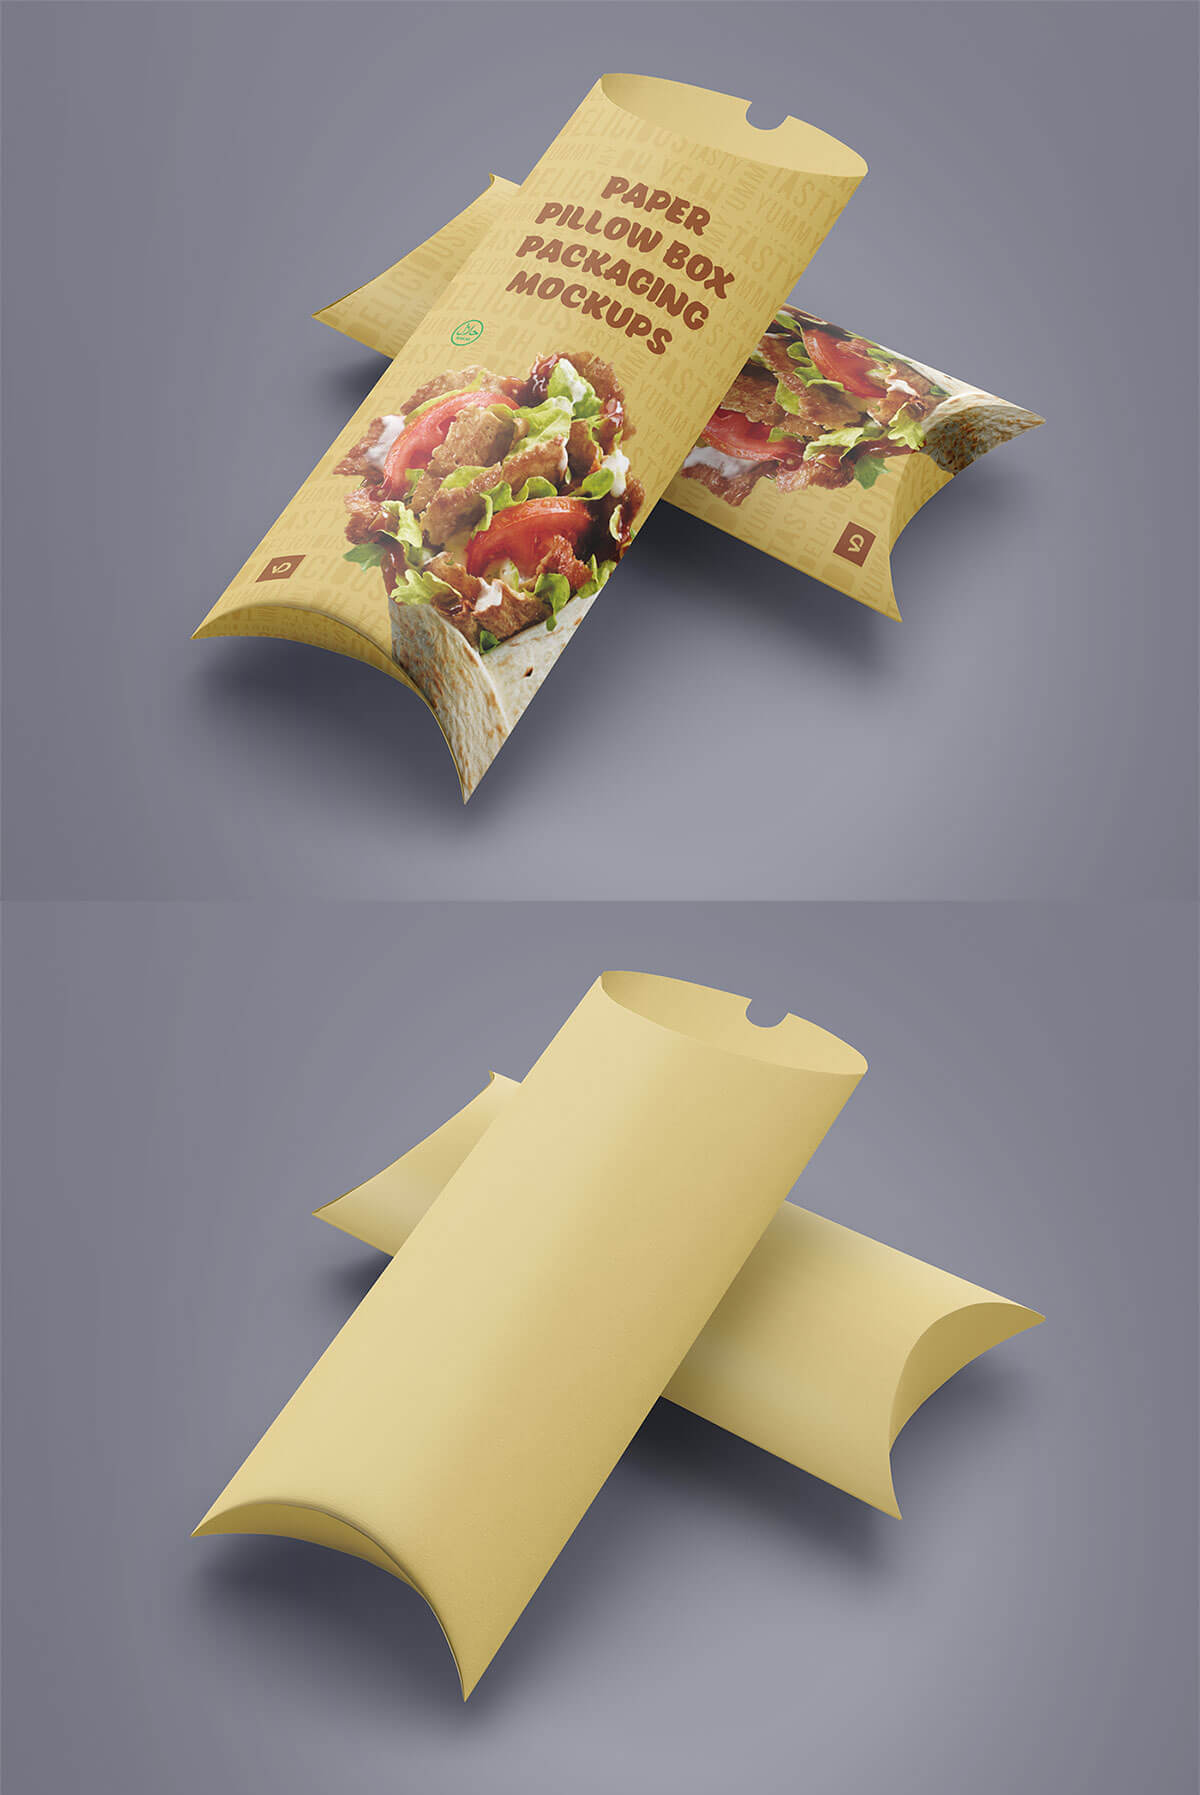 Paper Pillow Box Packaging Mockup Free Download